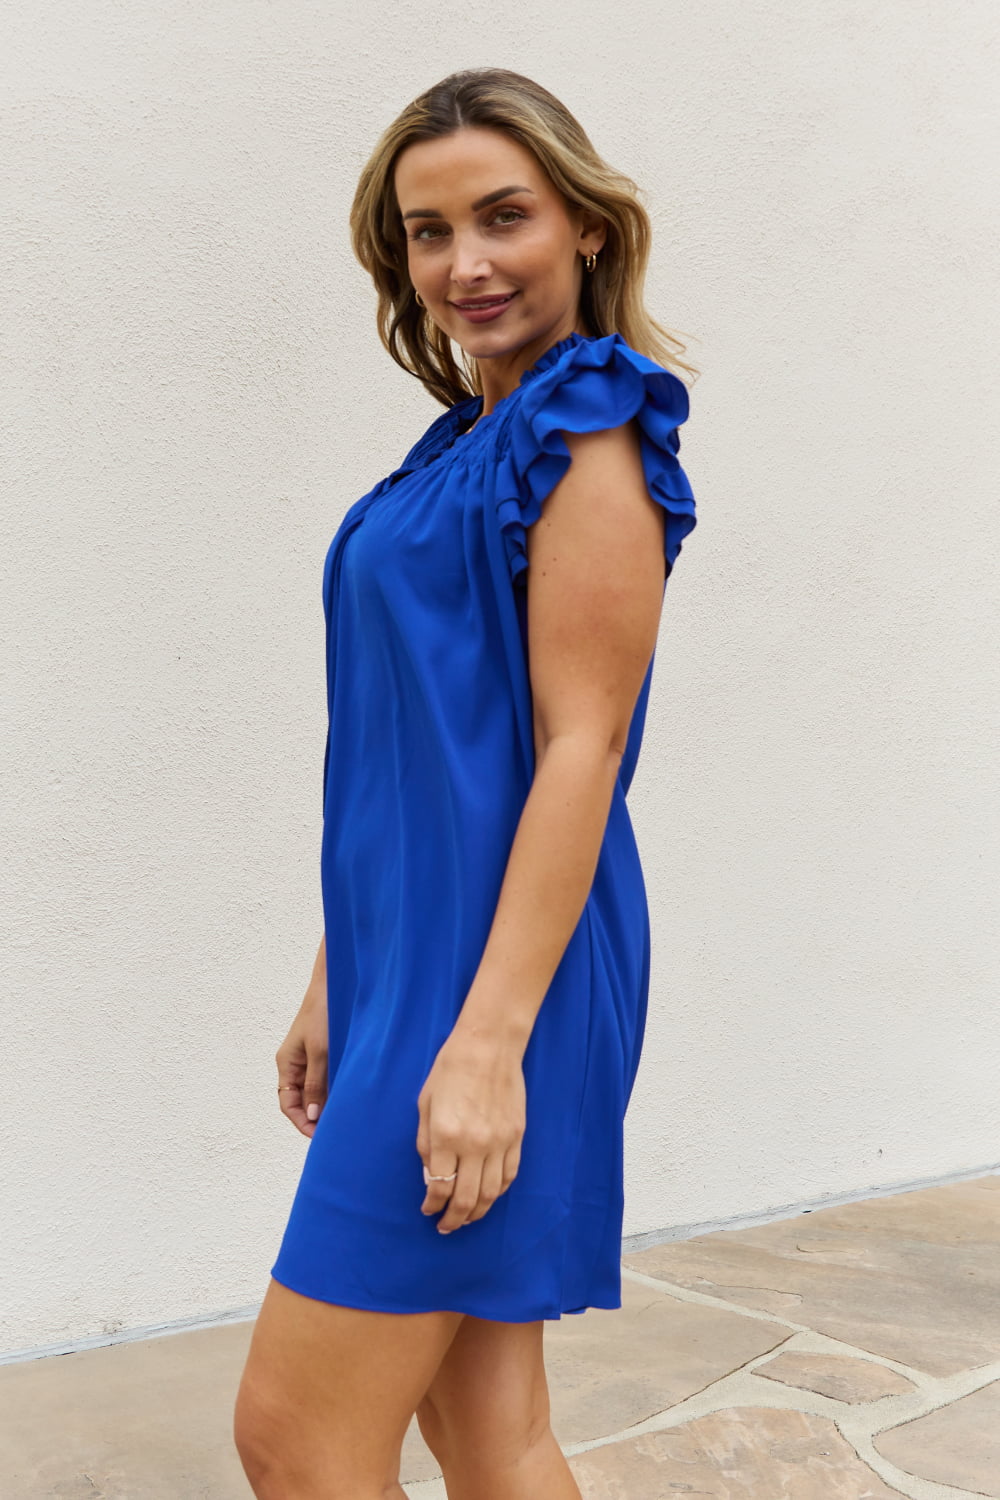 Ruffle Sleeve Smocked Detail Mini Dress in Royal BlueMini DressAnd the Why